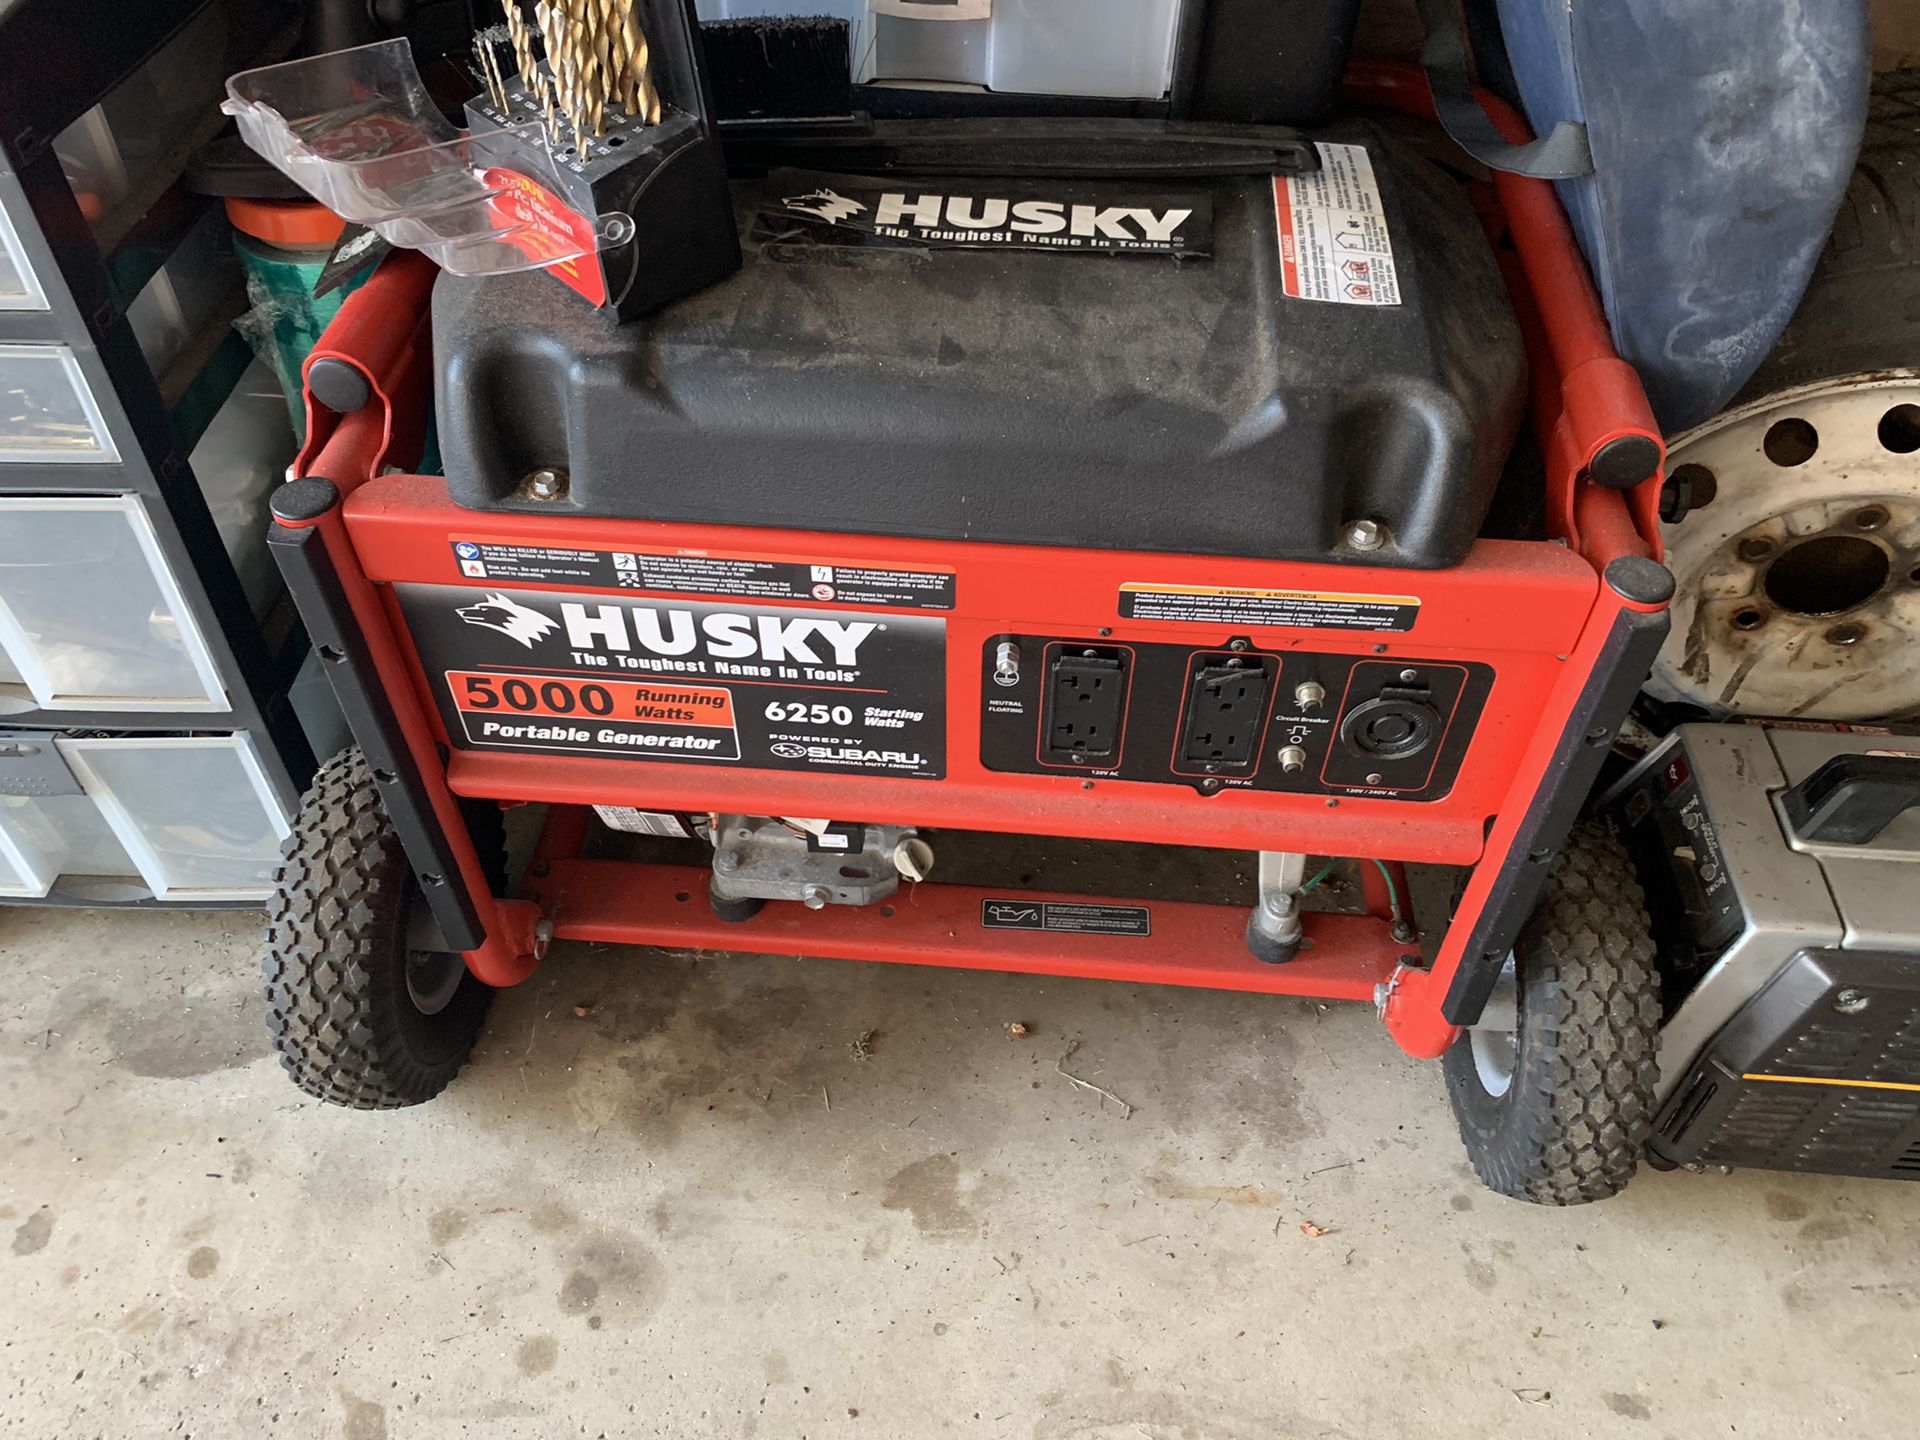 Portable generator 5000 husky